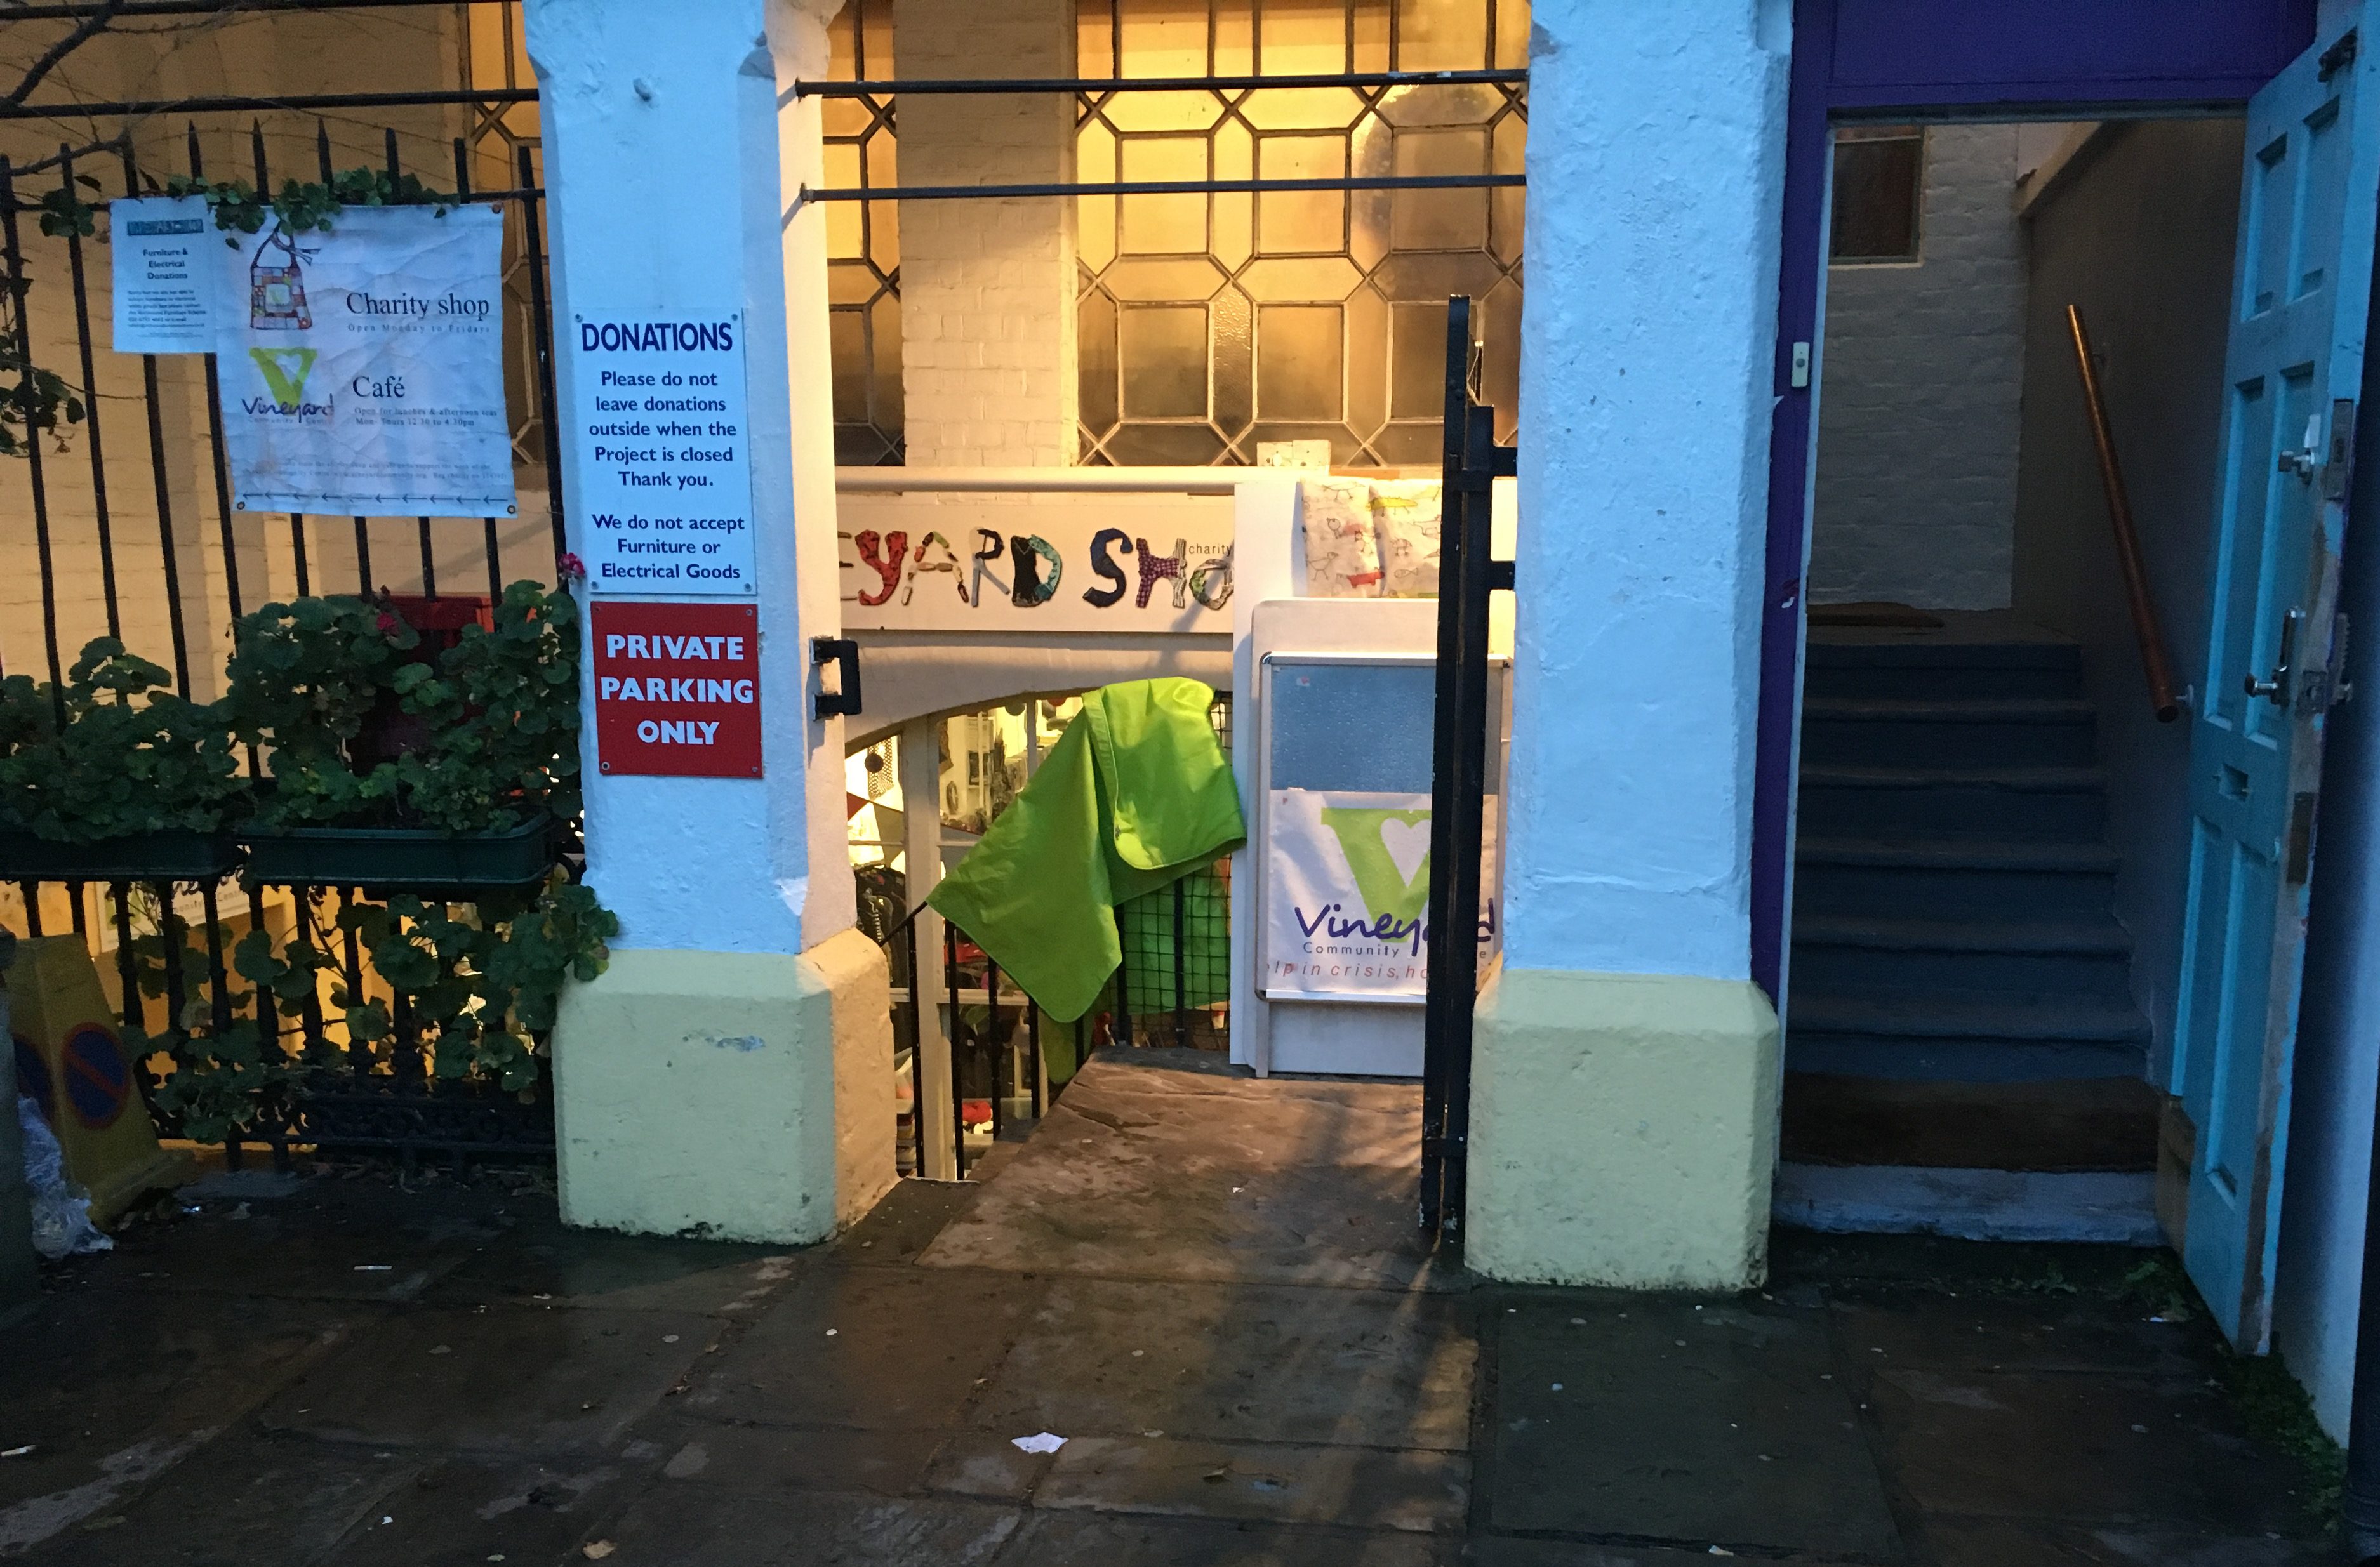 Vineyard Charity Shop entrance